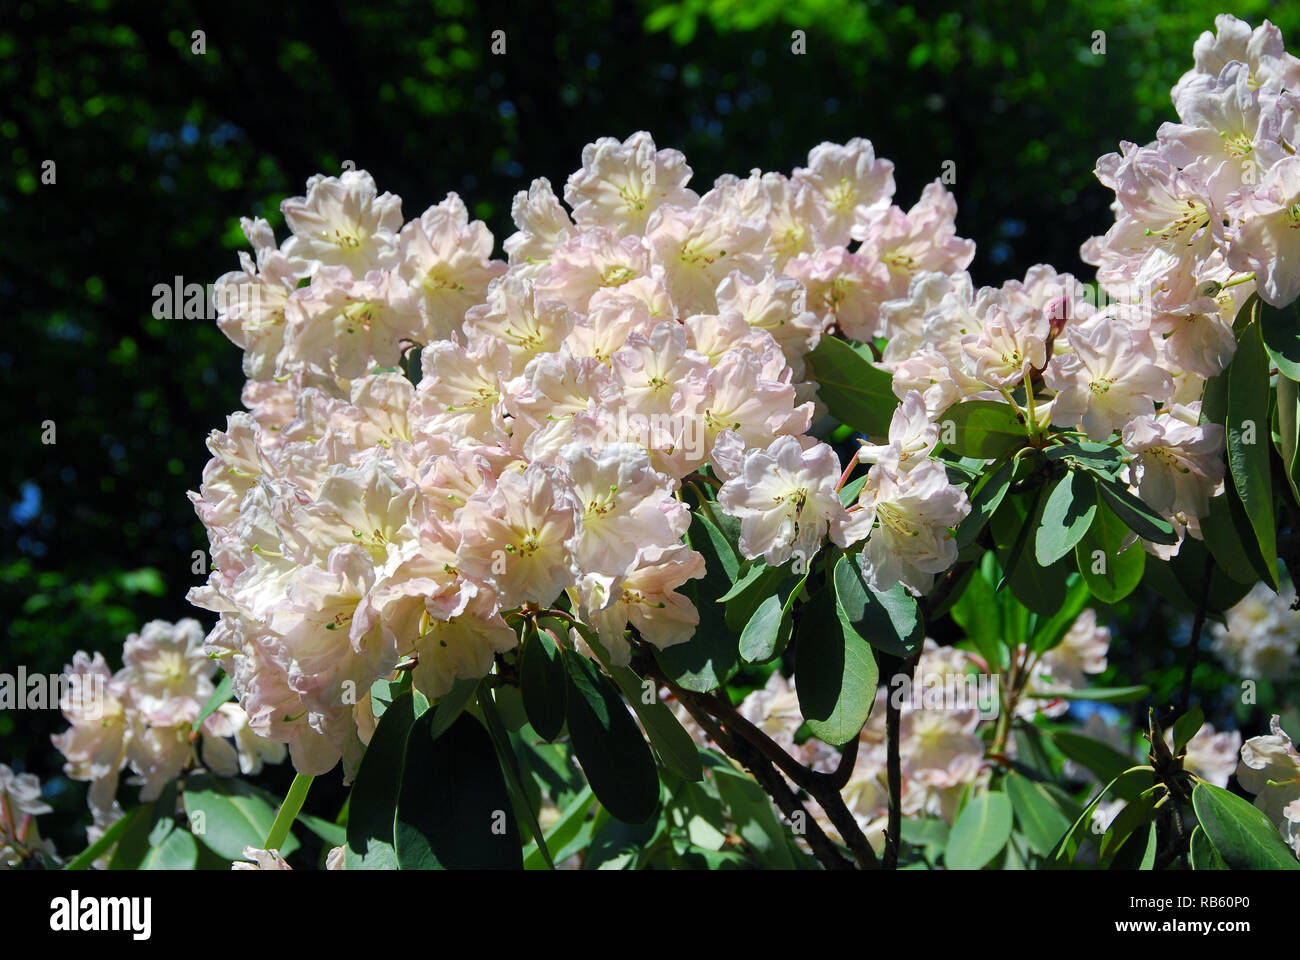 Blühende Rhododendron im Jeli Arboretum, Ungarn. Rhododendron, Rhododendren, havasszépe oder rododendron Stockfoto